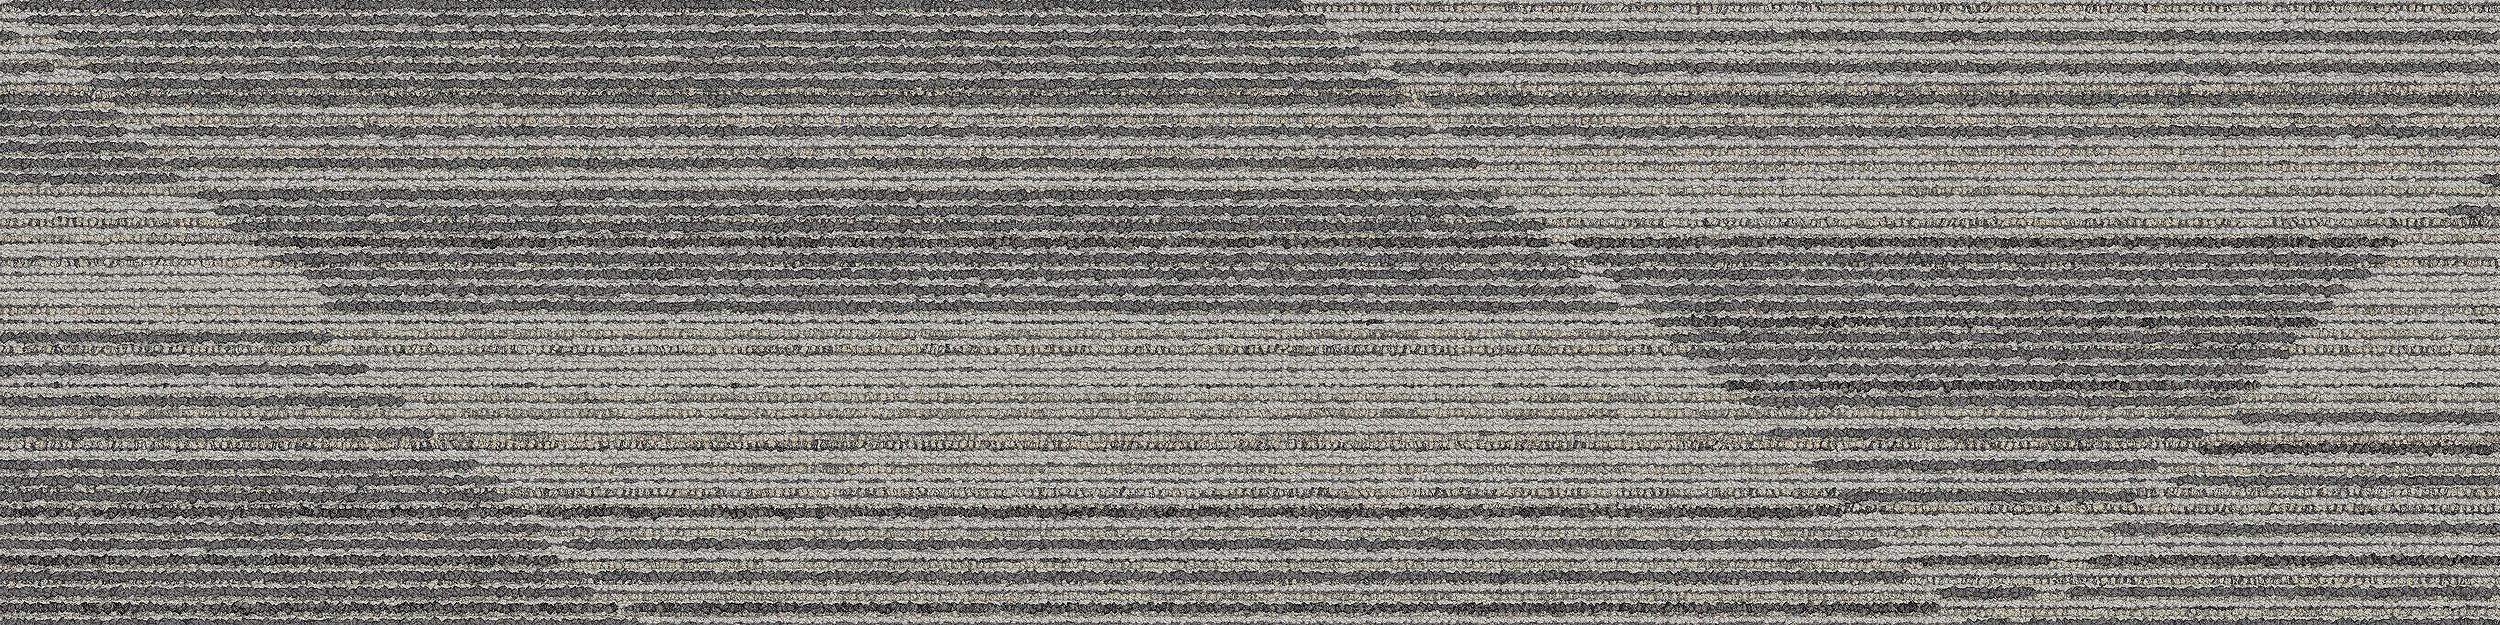 Driftwood Carpet Tile In Linden numéro d’image 11